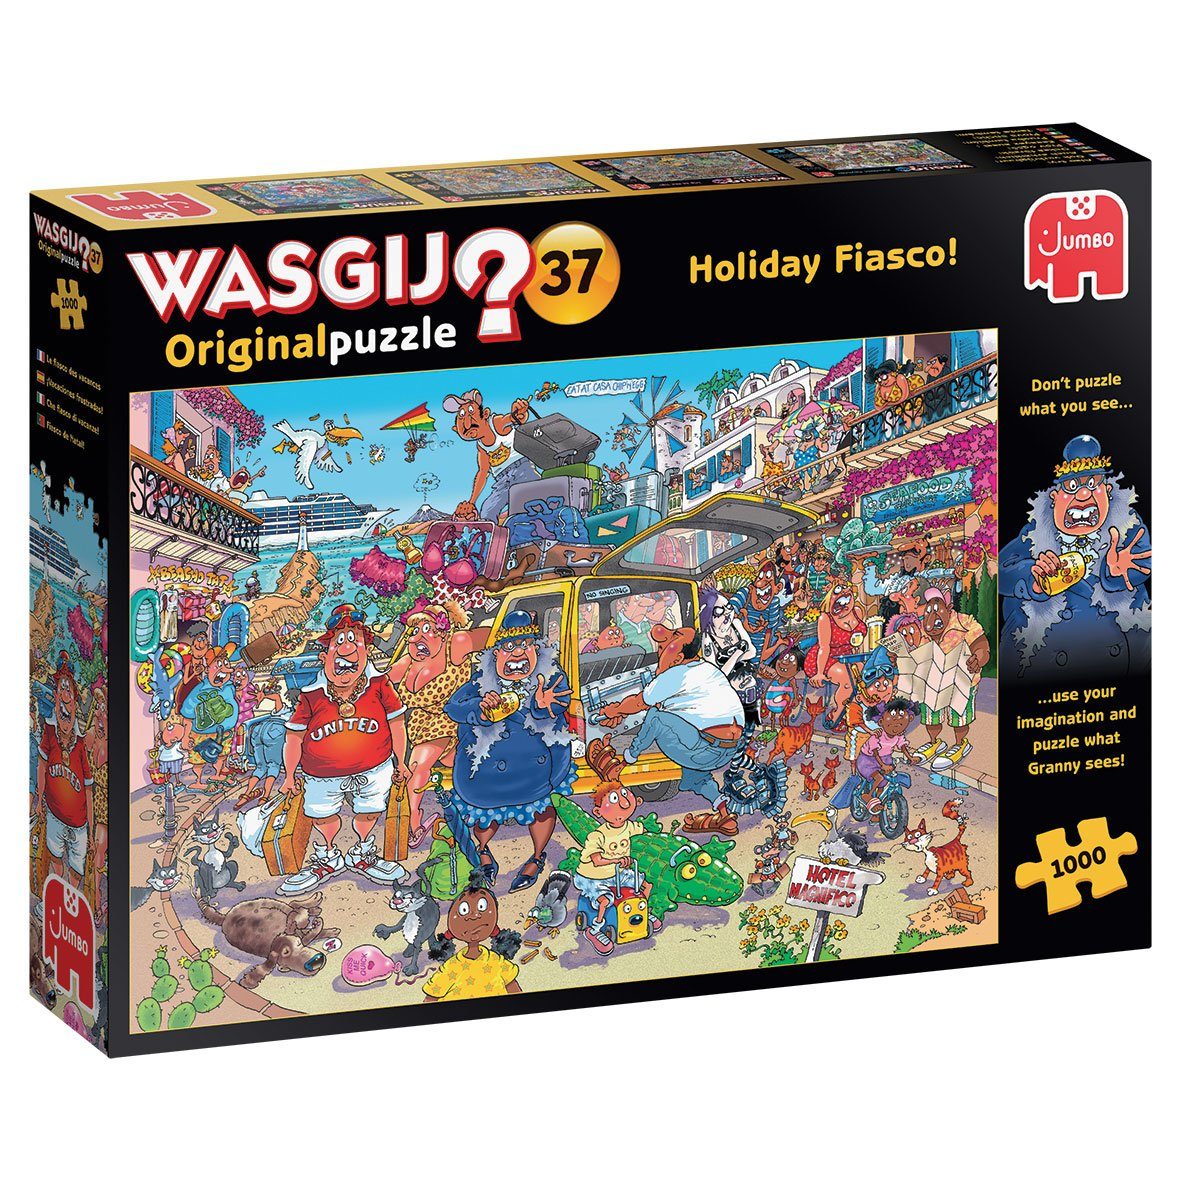 Puzzle Spiele die Puzzleteile, Holiday Wasgij Sie Oma sieht. Jumbo 1000 25004 37 Puzzeln Fiasco!, was Original